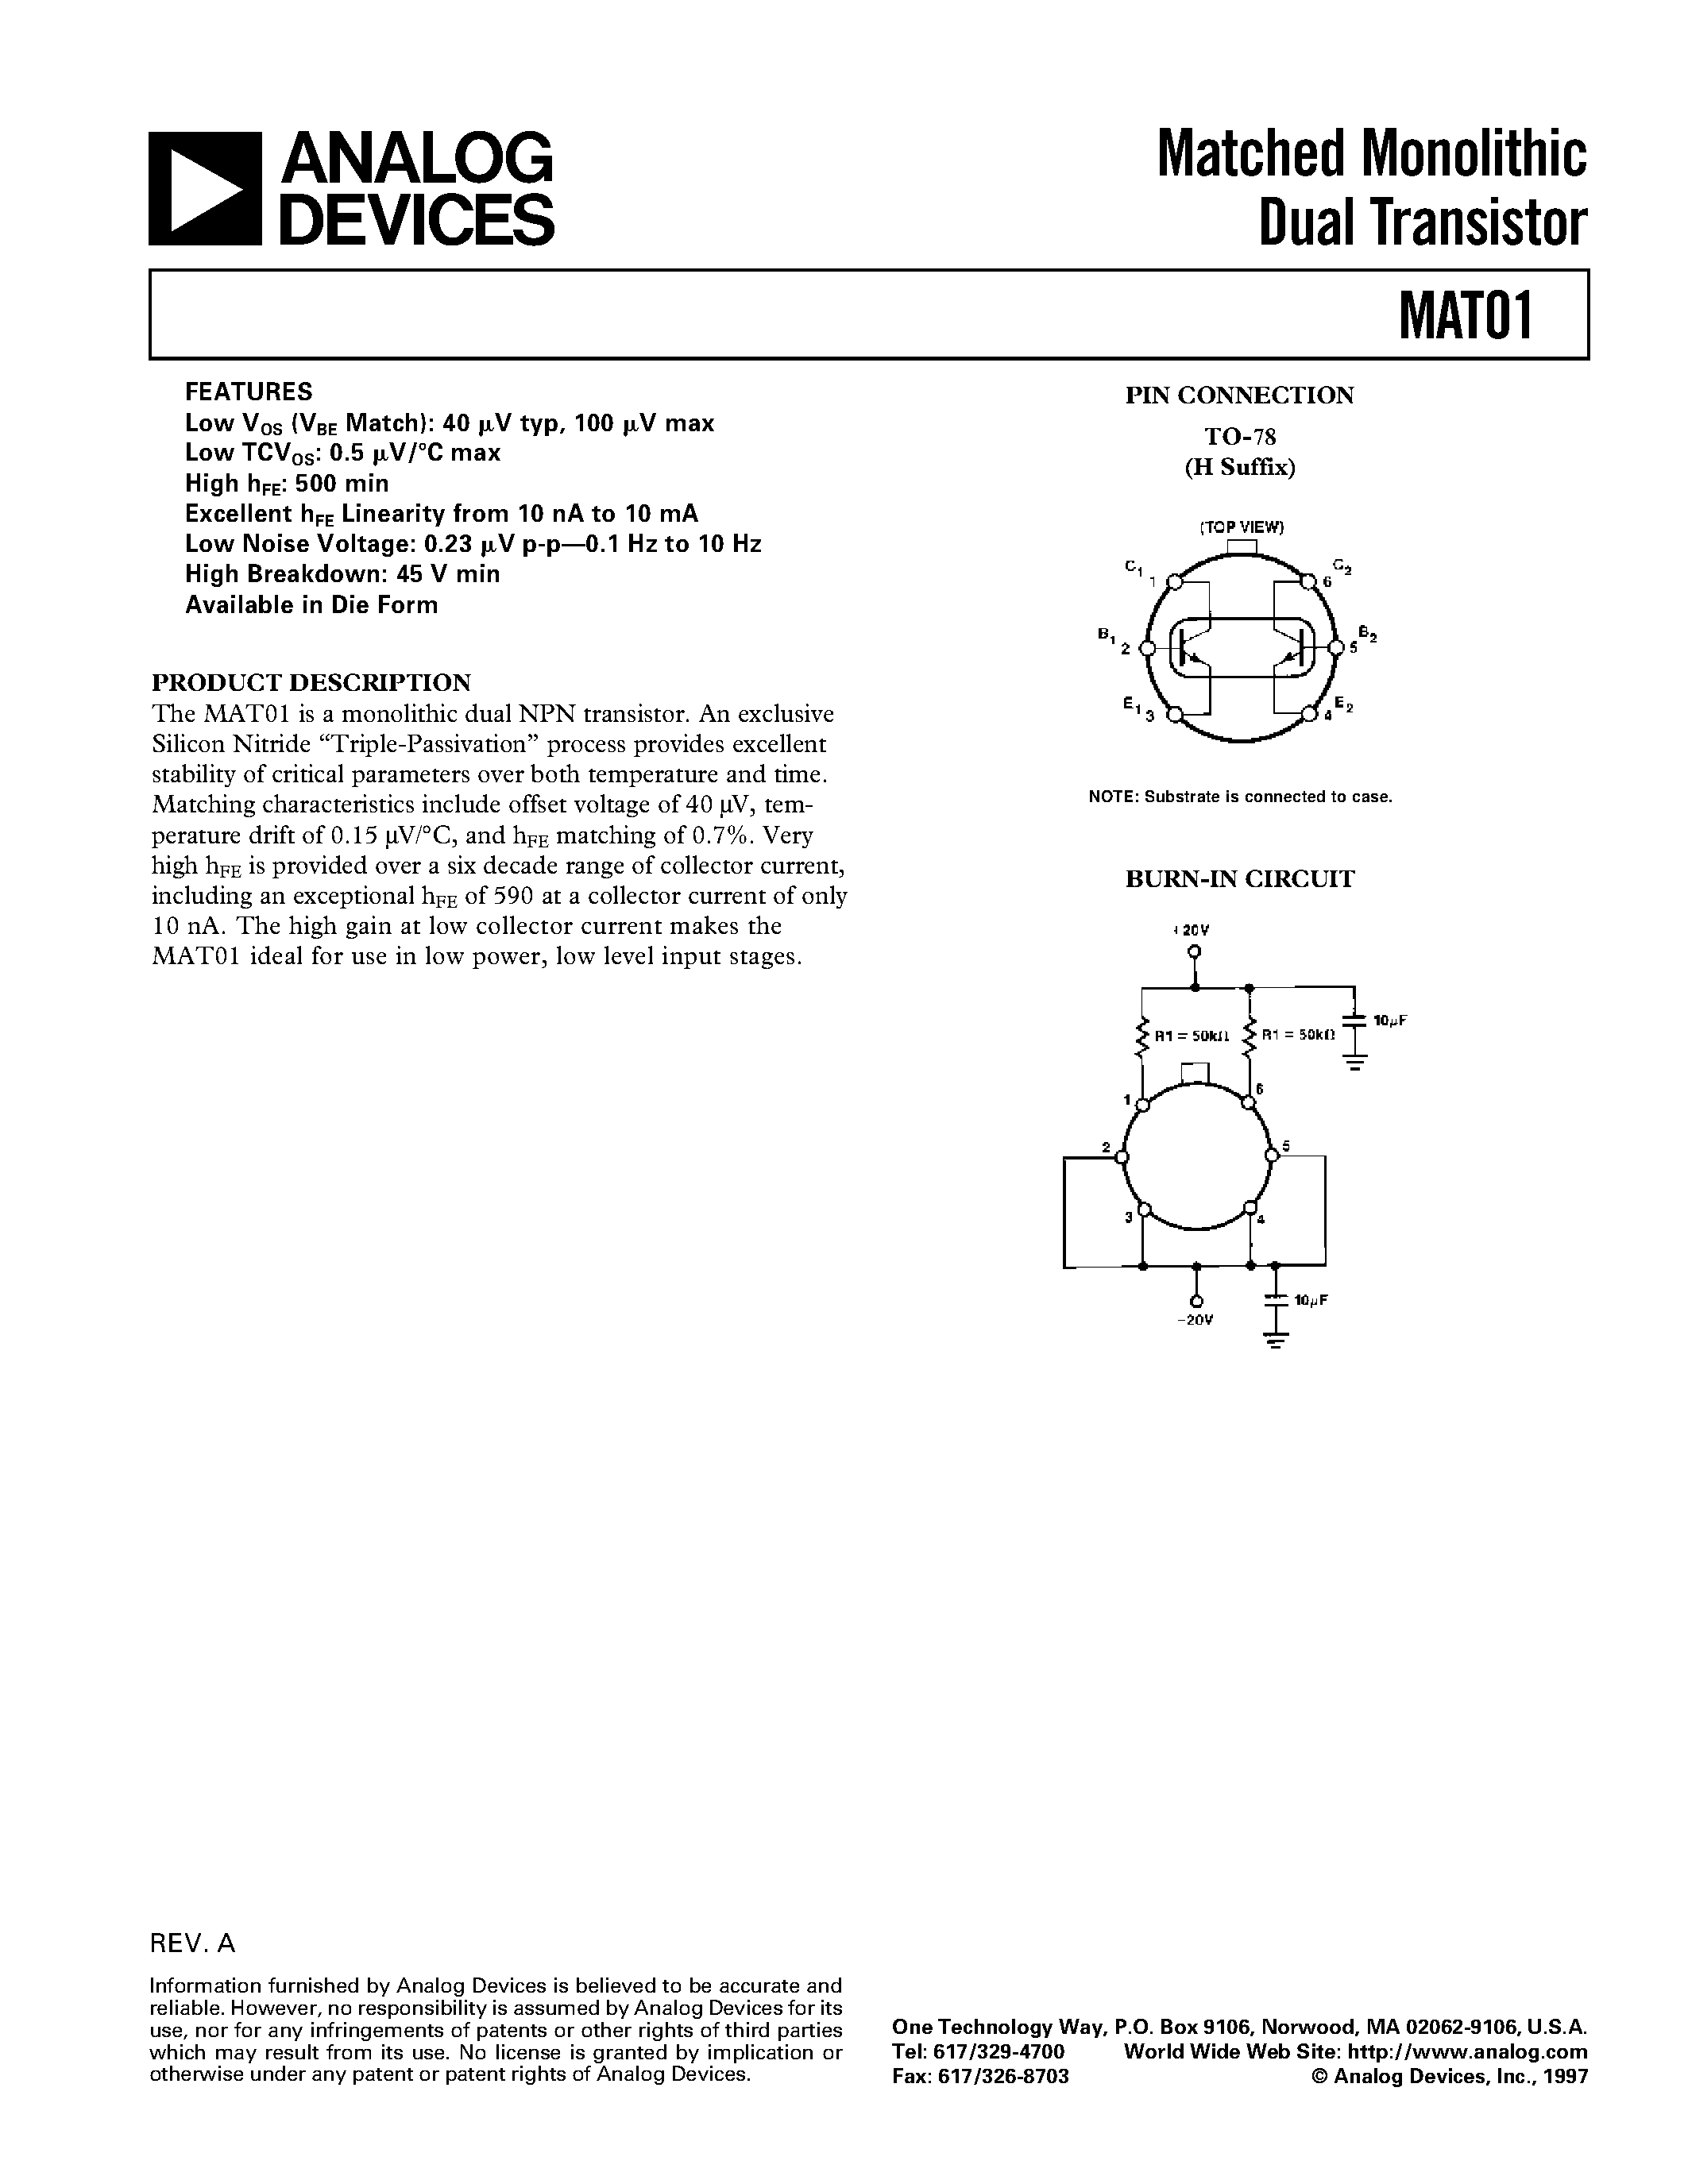 Datasheet MAT01 - Matched Monolithic Dual Transistor page 1